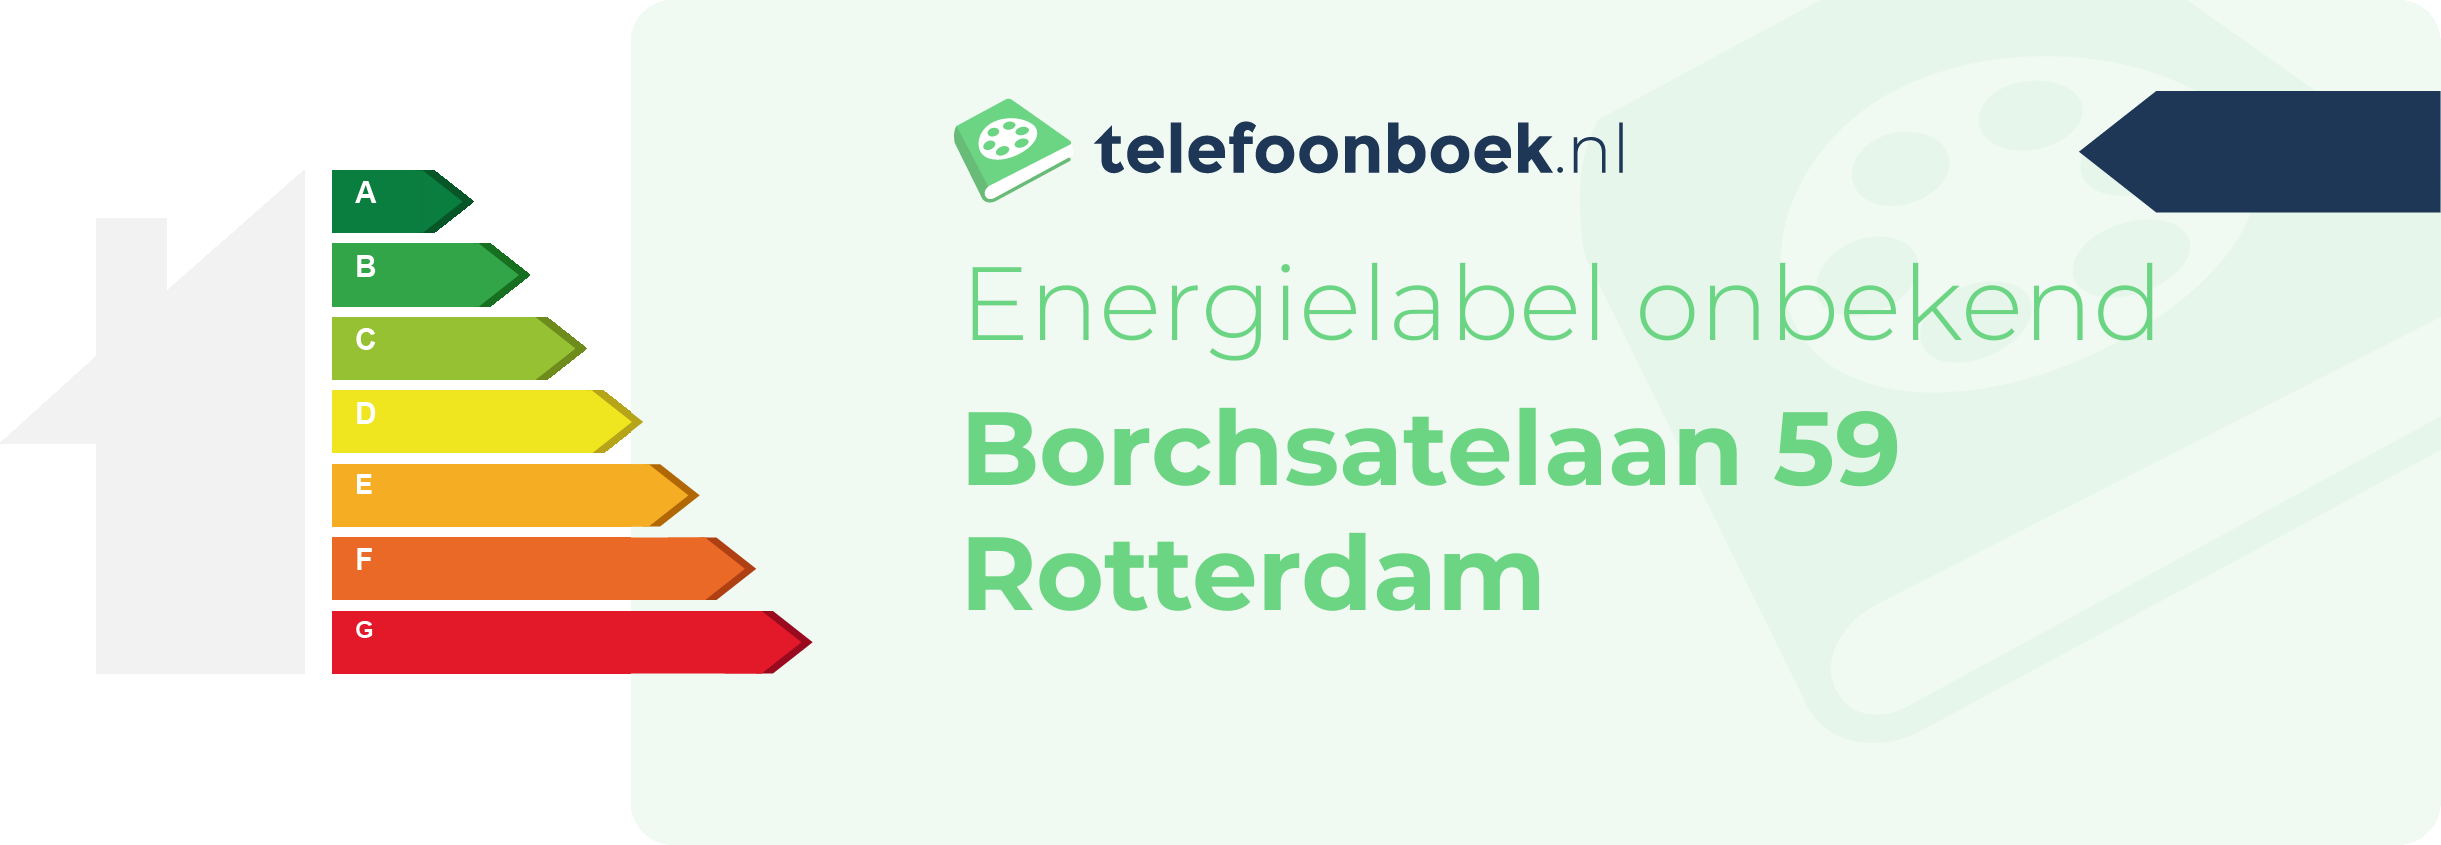 Energielabel Borchsatelaan 59 Rotterdam